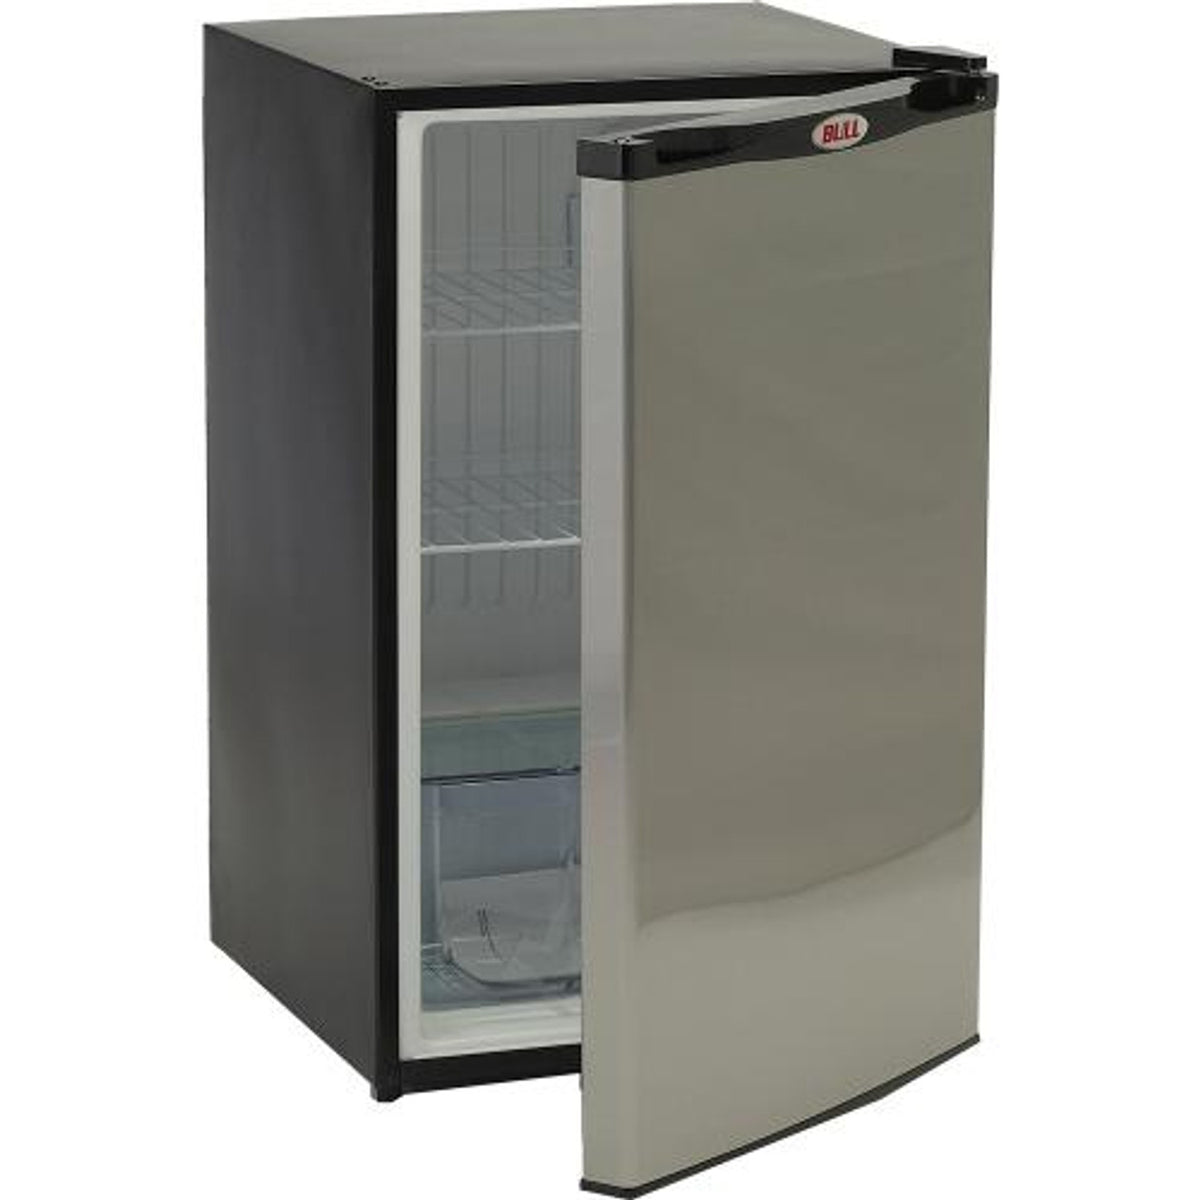 Bull 20 Inch Compact Refrigerator